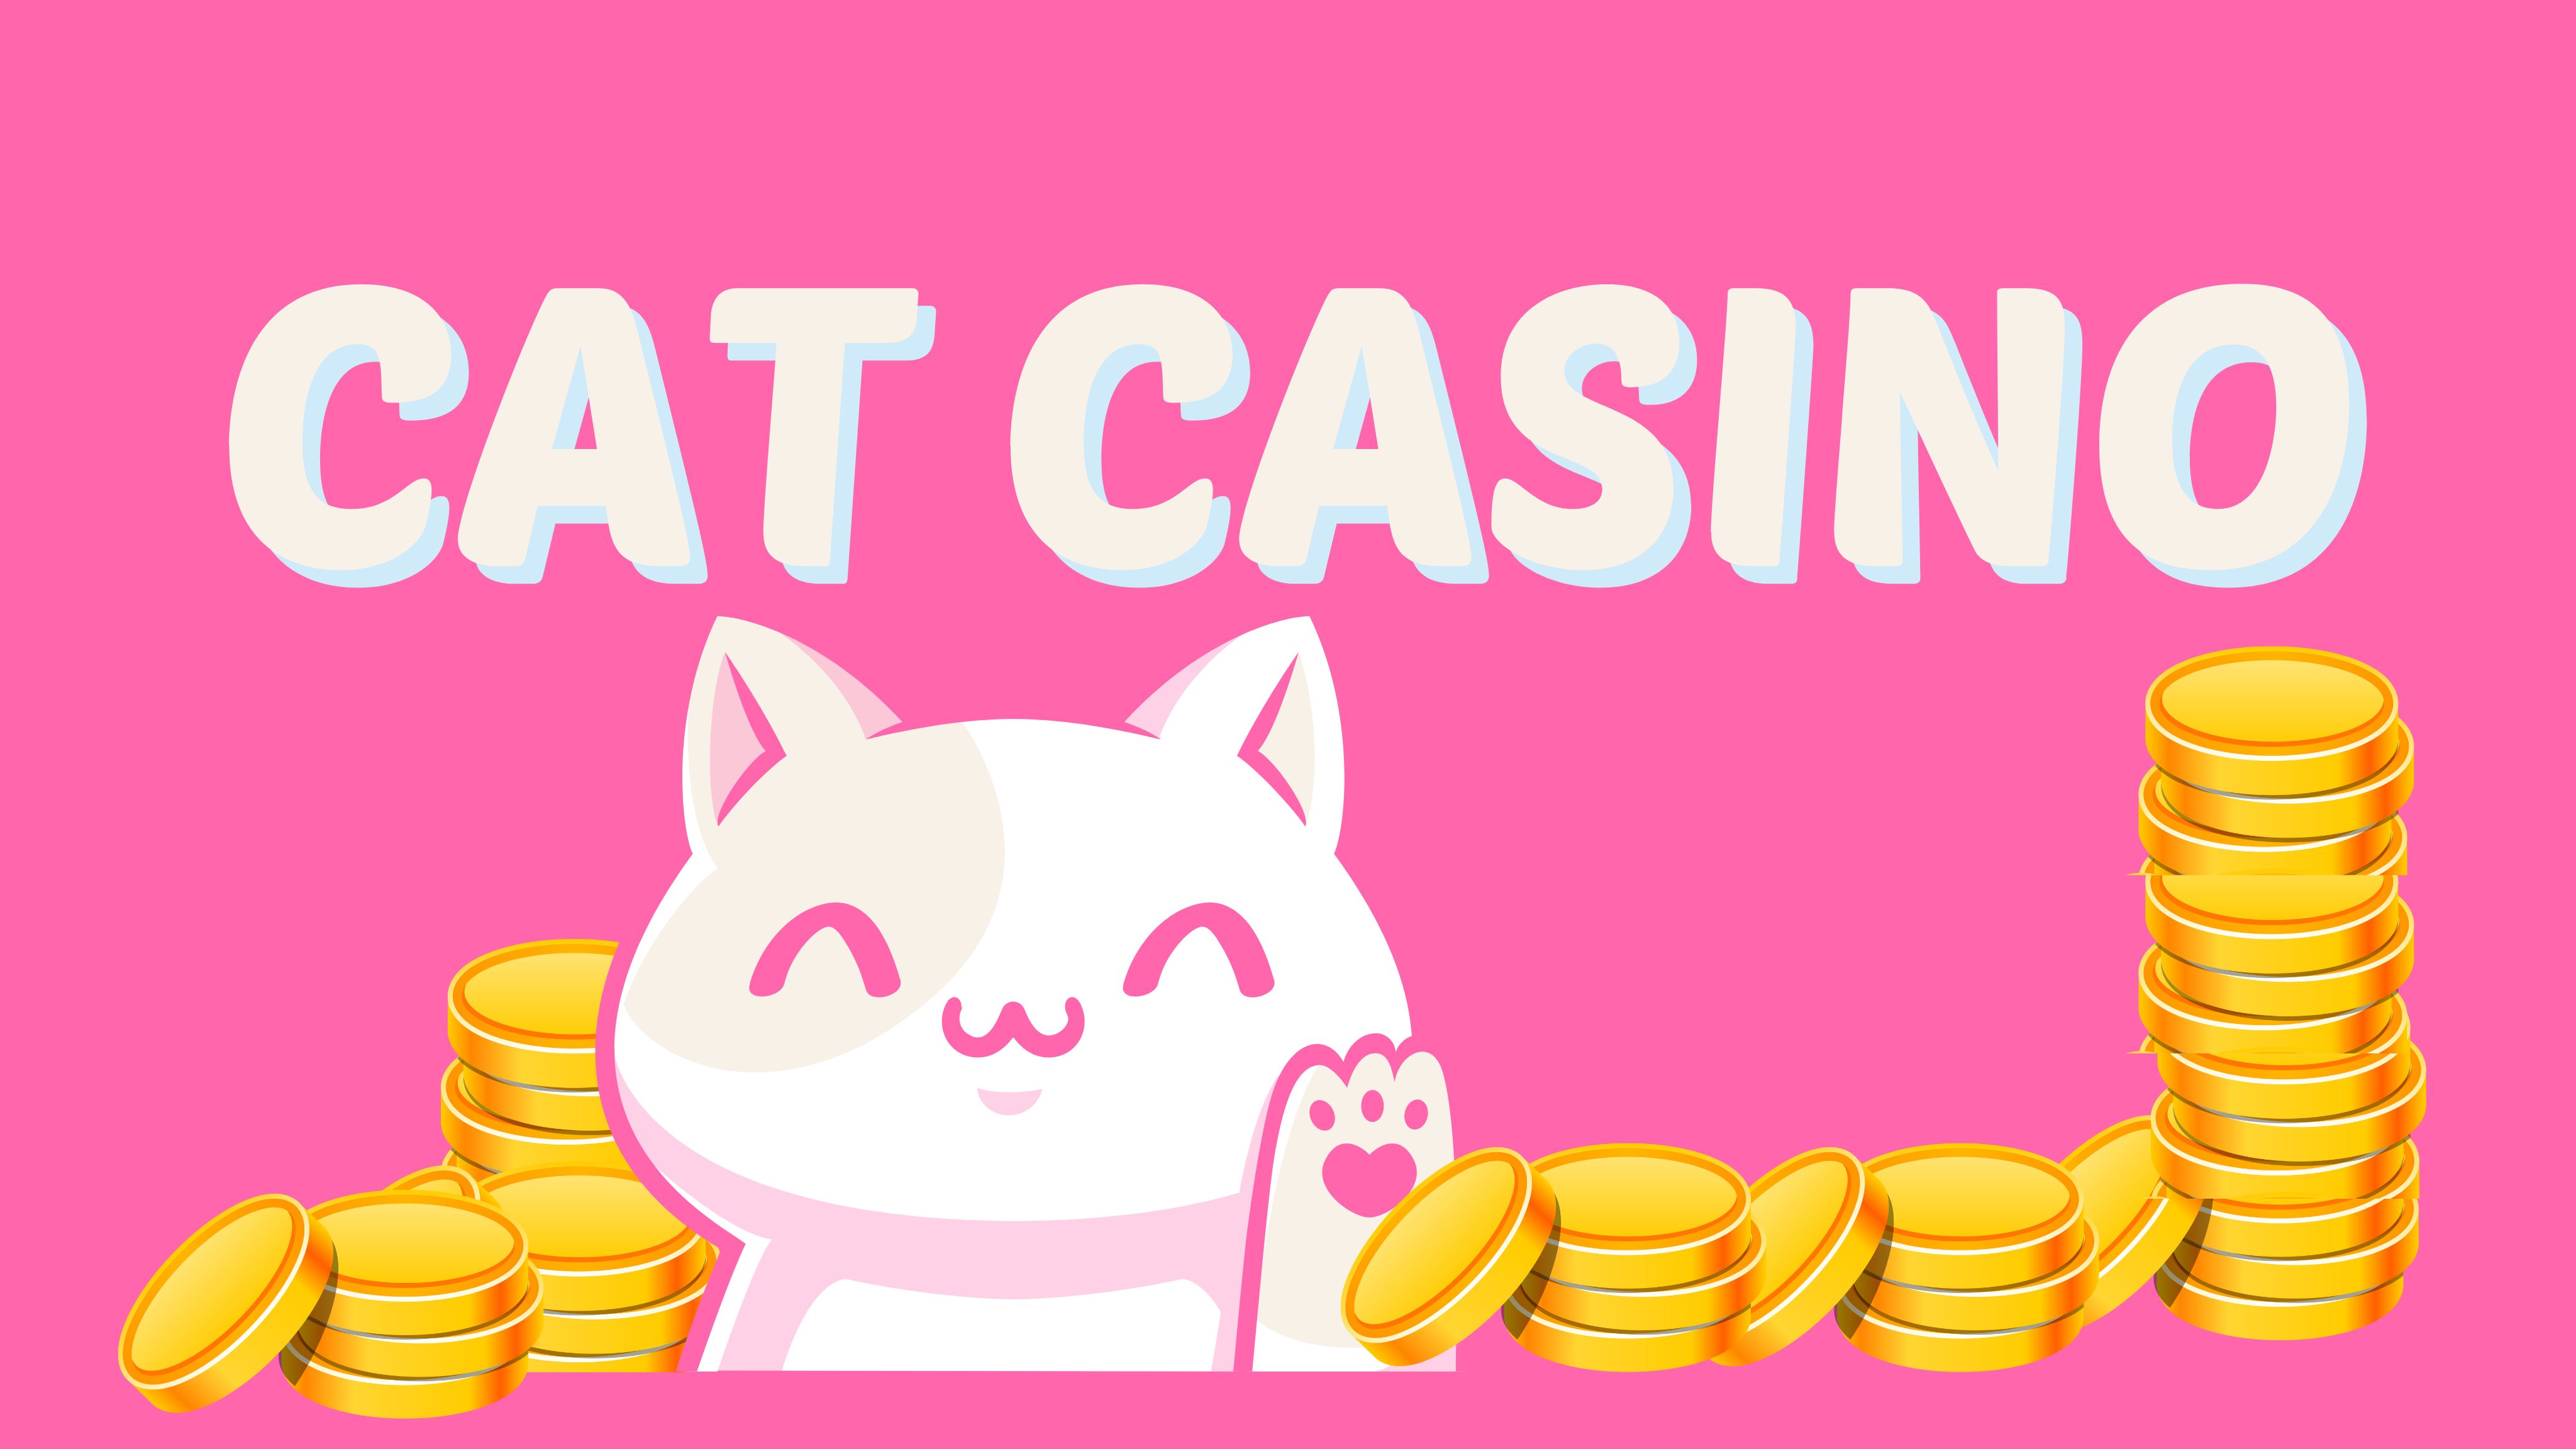 Cat Casino. Cat casino cat casino press